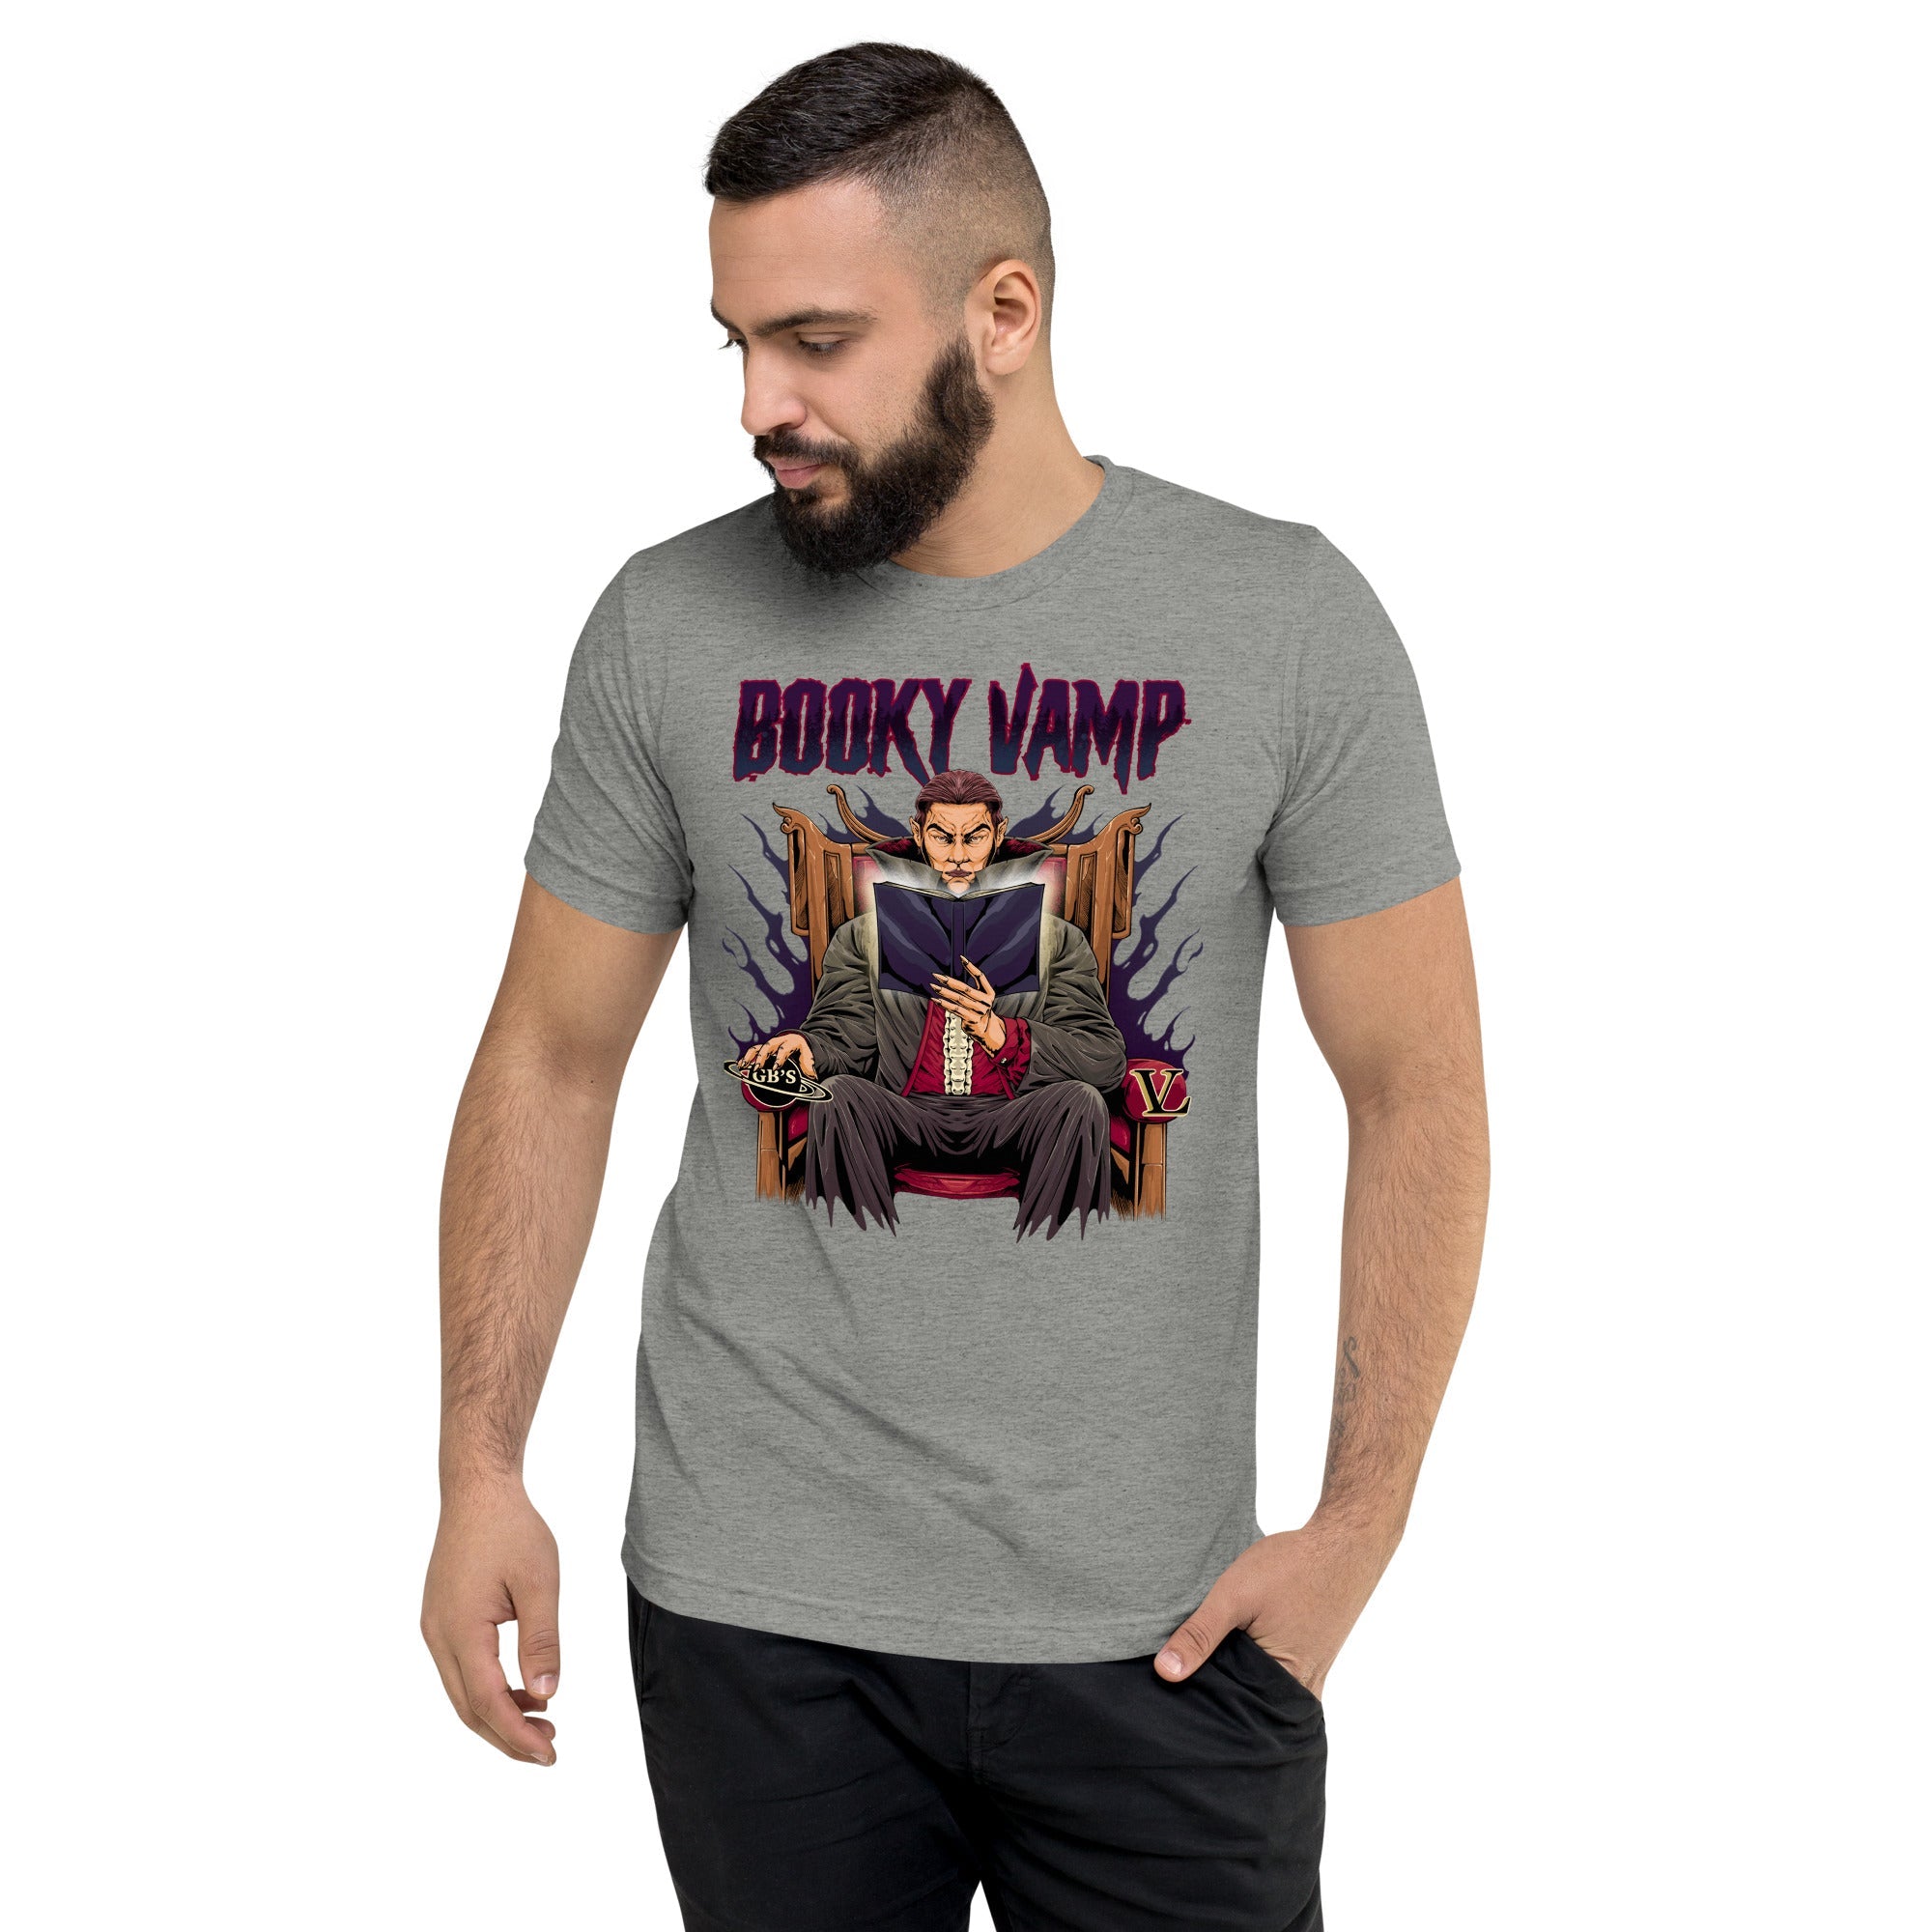 GBNY Athletic Grey Triblend / XS Vamp Life X GBNY "Booky Vamp" T-shirt - Men's 2381652_6472